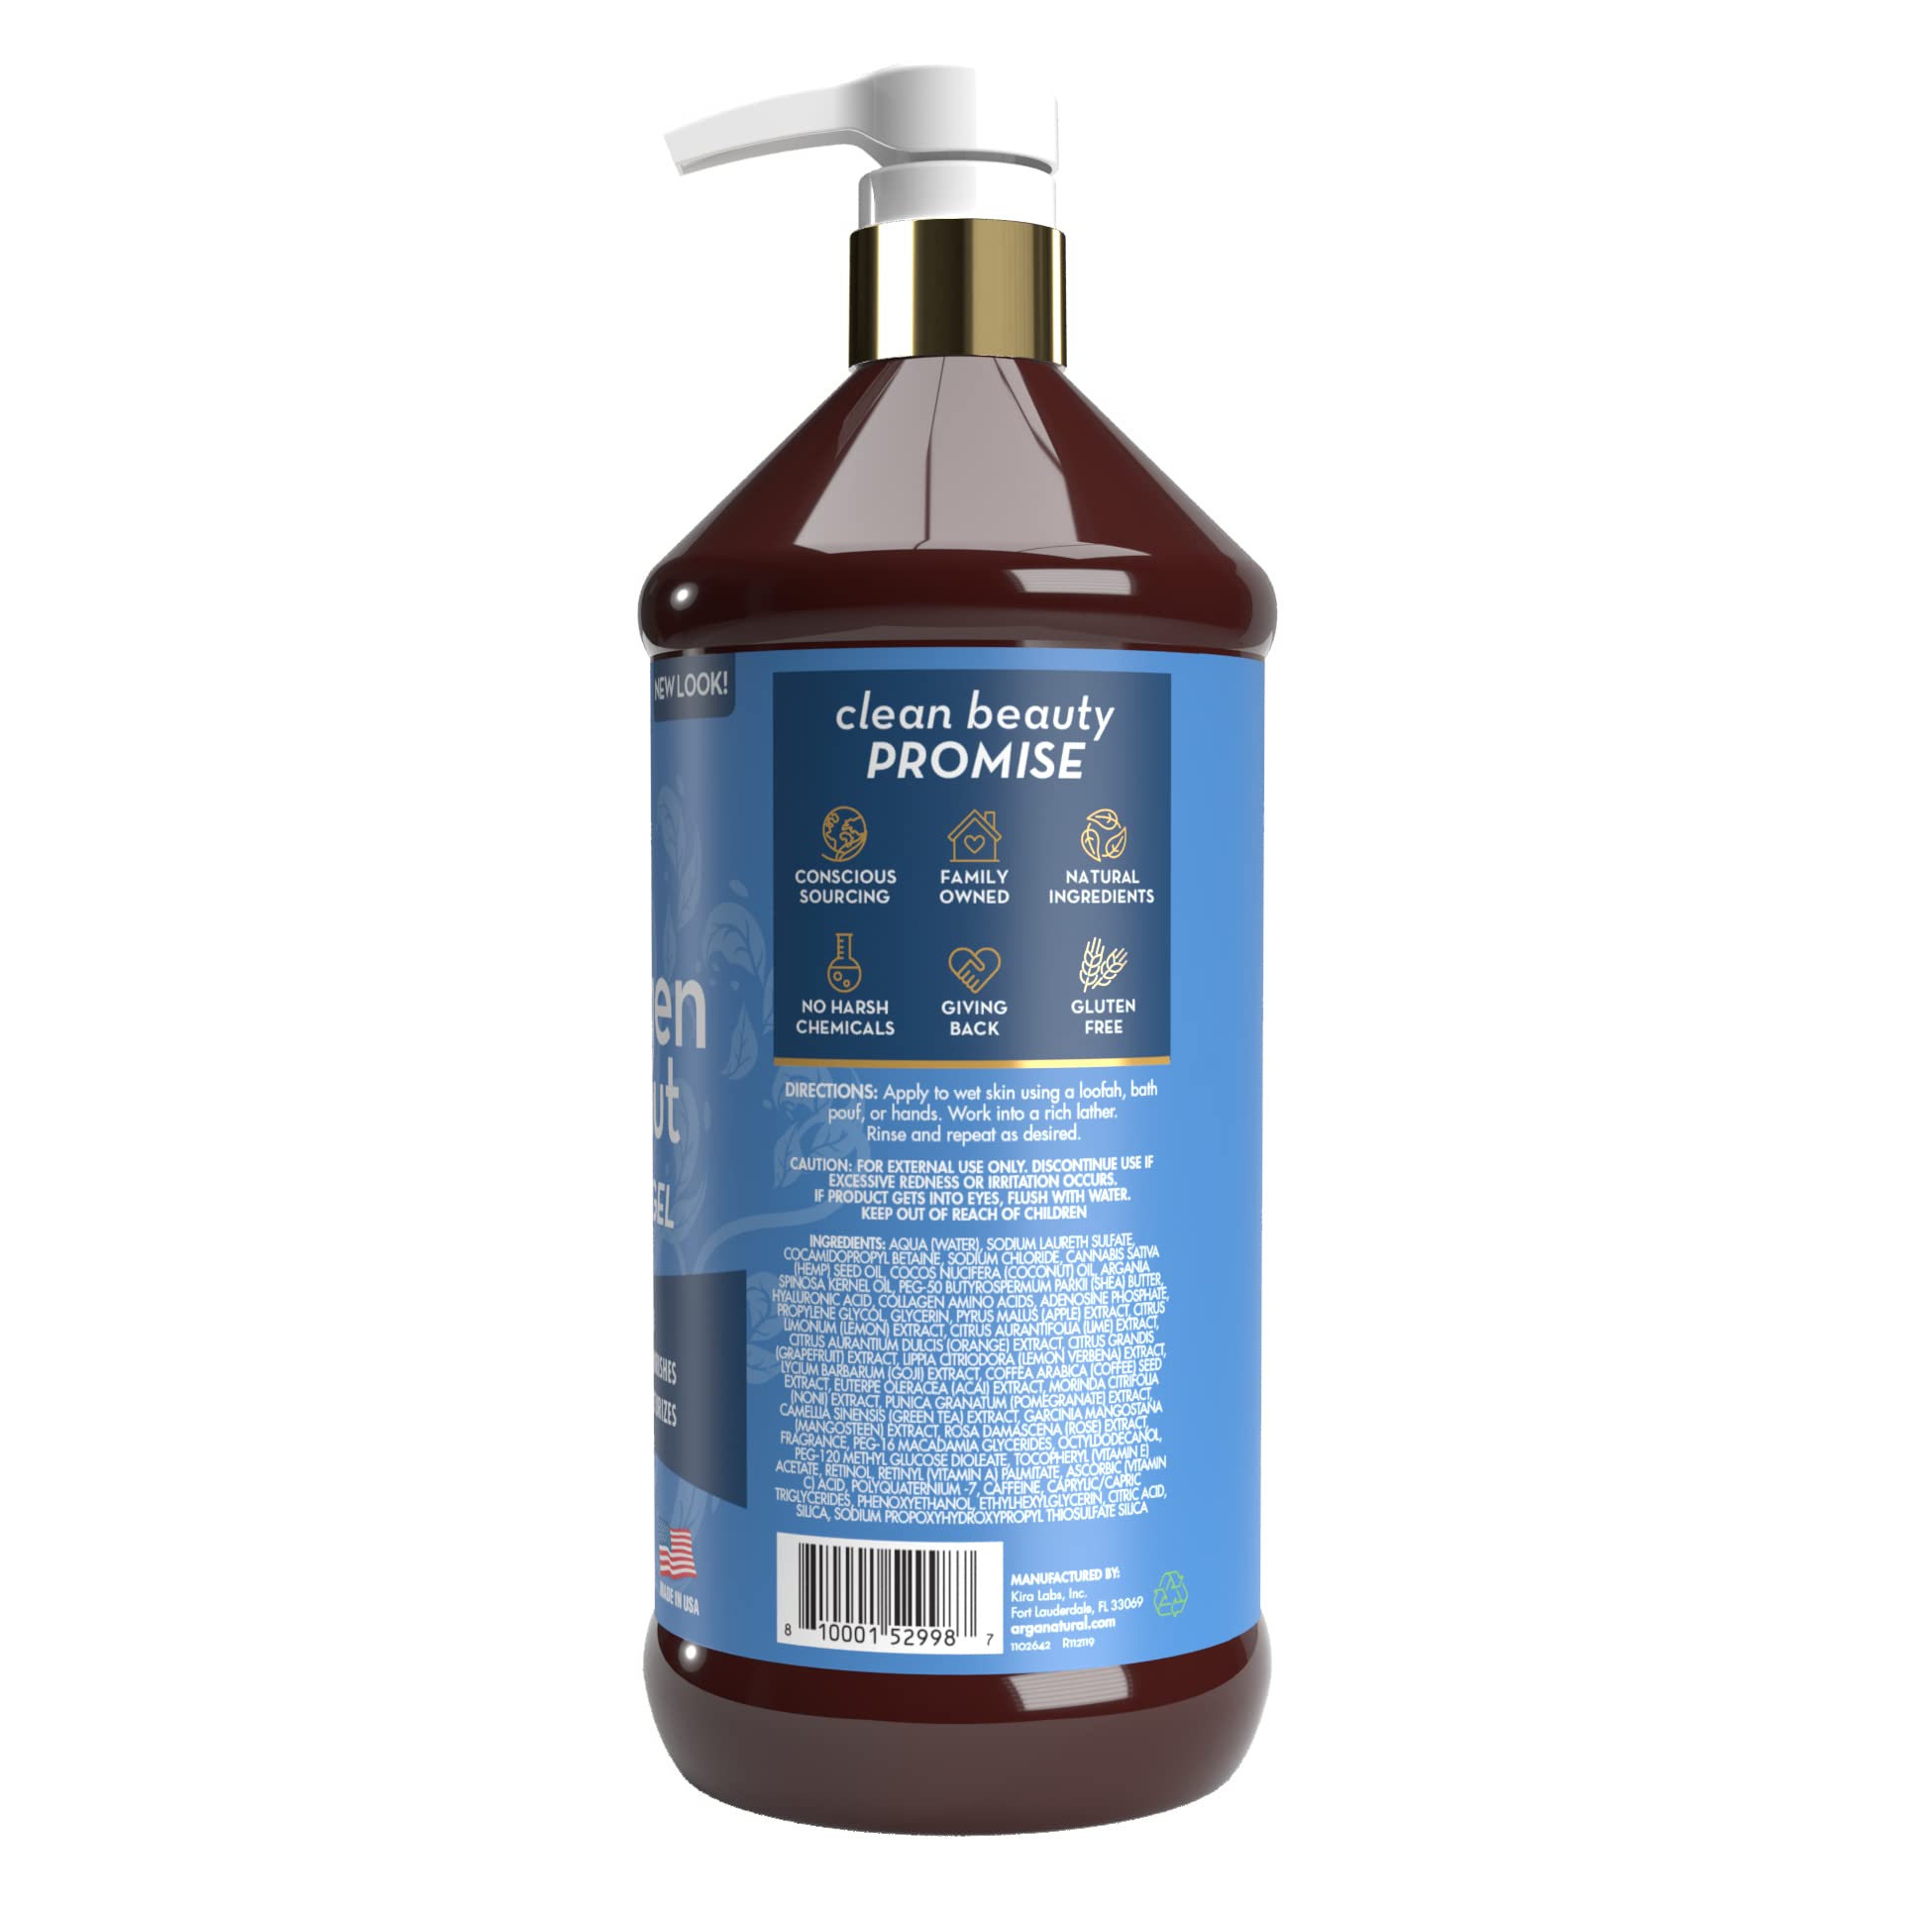 Arganatural Firming Collagen Coconut Shower Gel, Moisturizing Body Wash with Argan Oil (32 Ounces/960 Milliliters)